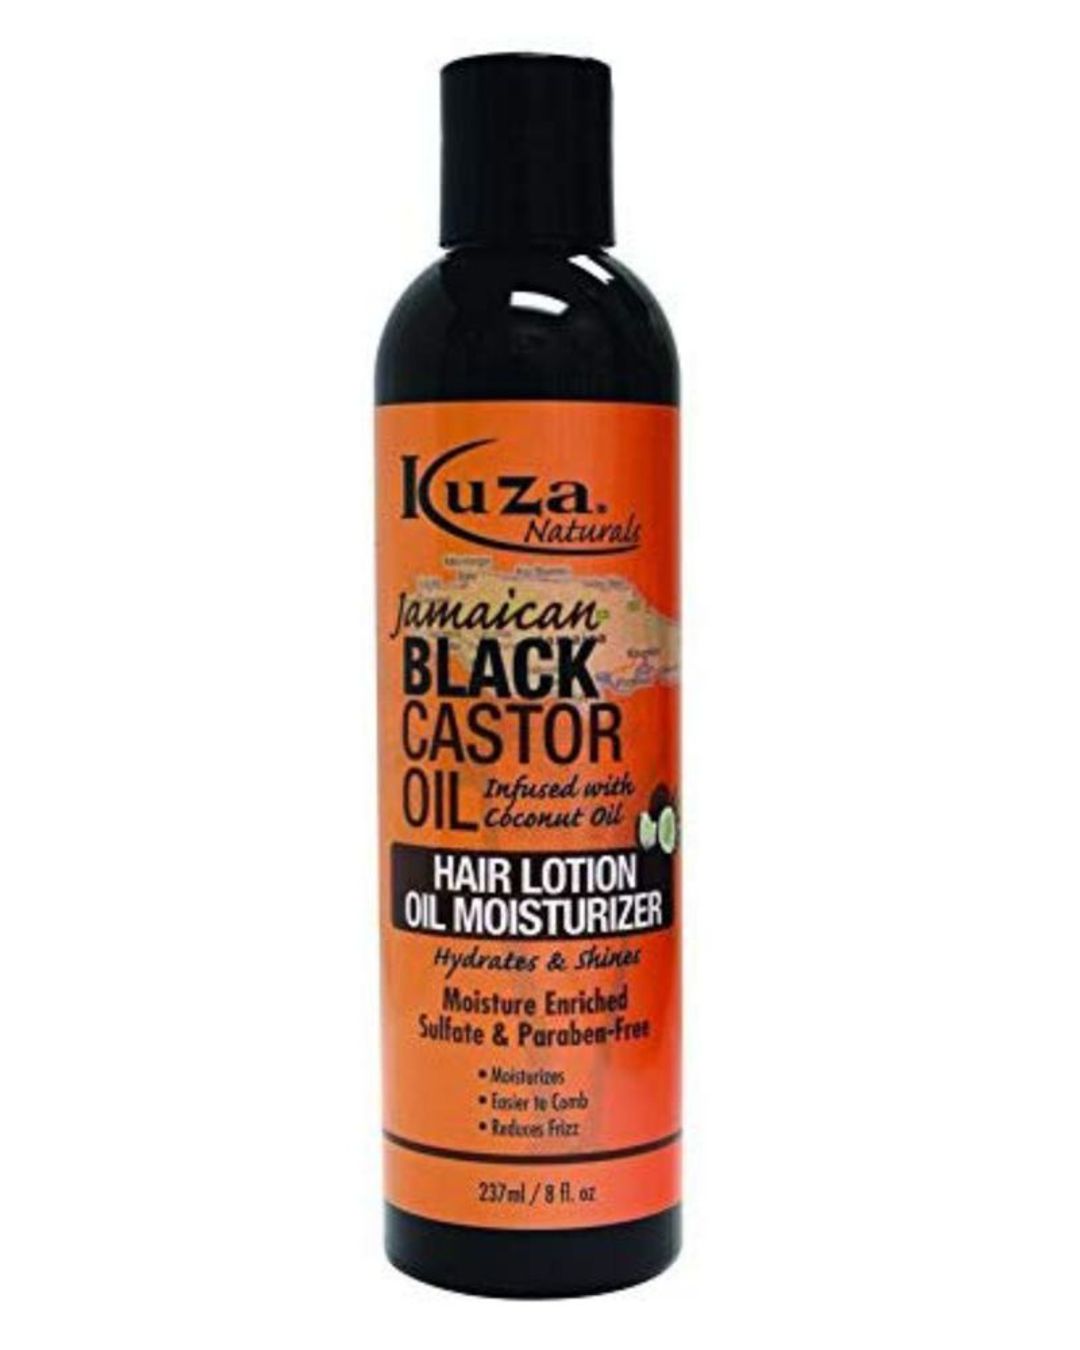 Kuza Jamaican Black Castor Oil Hair Lotion Oil Moisturizer - 8oz